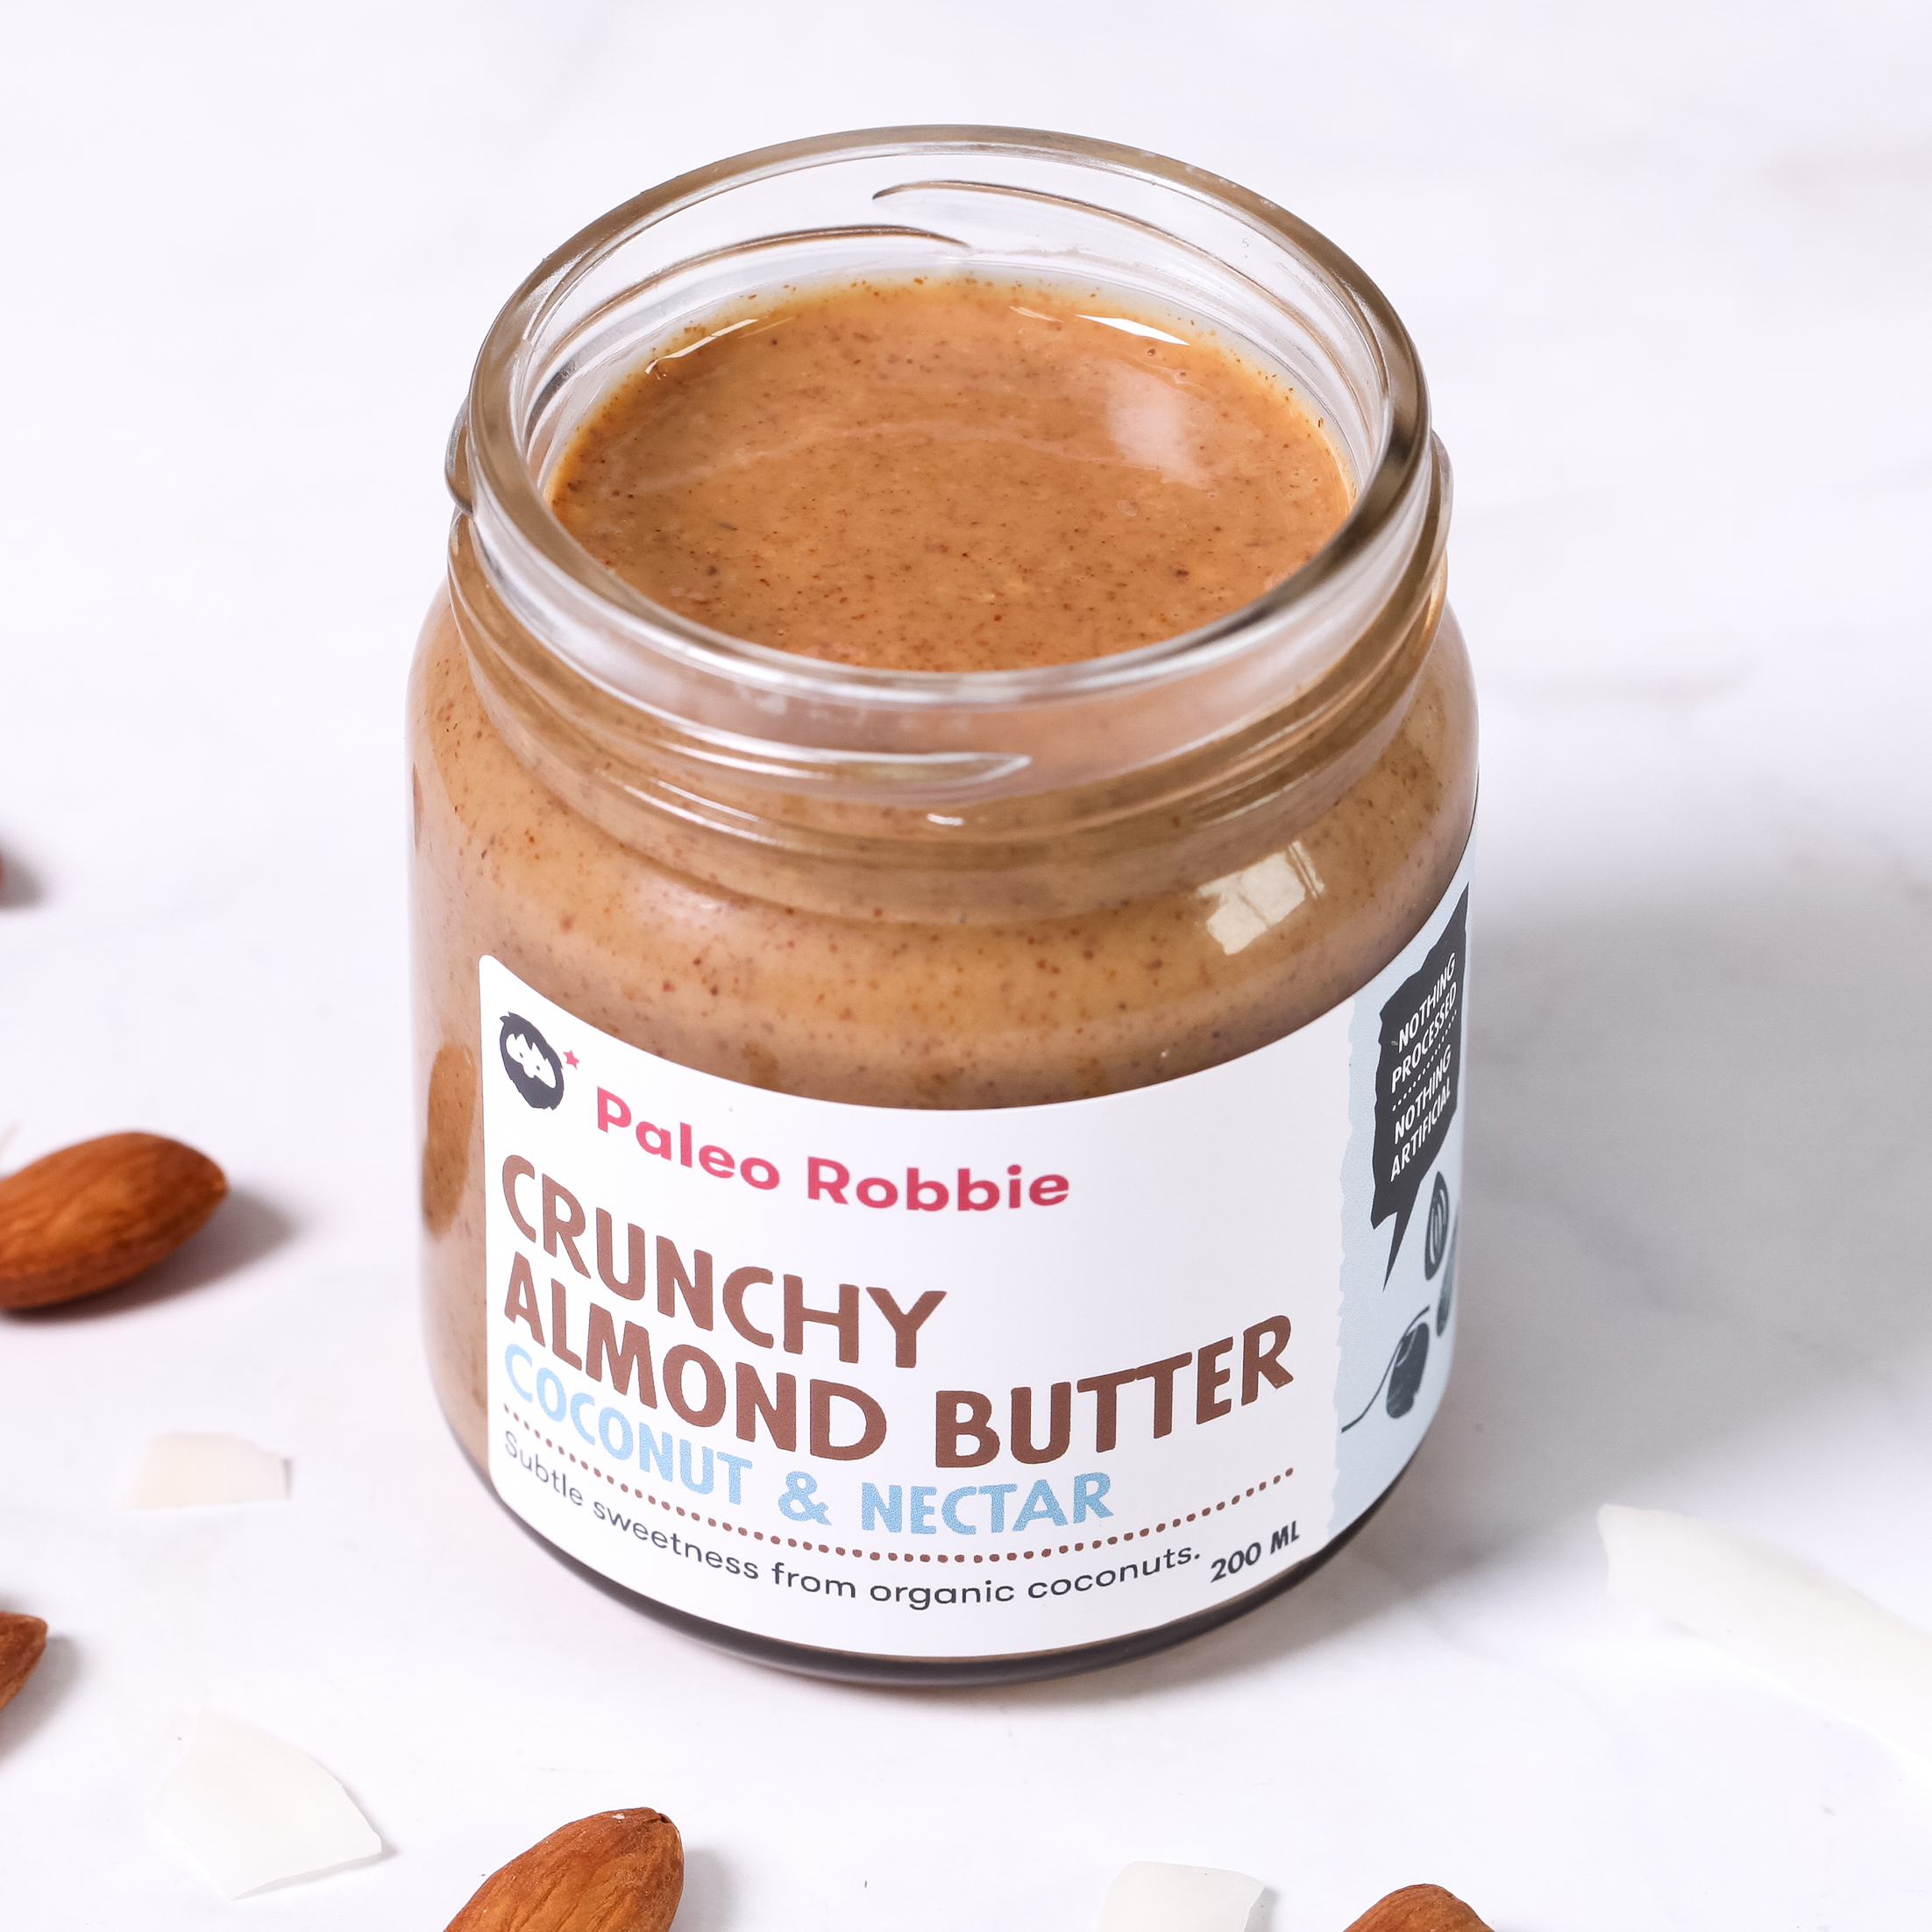 Crunchy Almond Butter w/ Coconut & Nectar